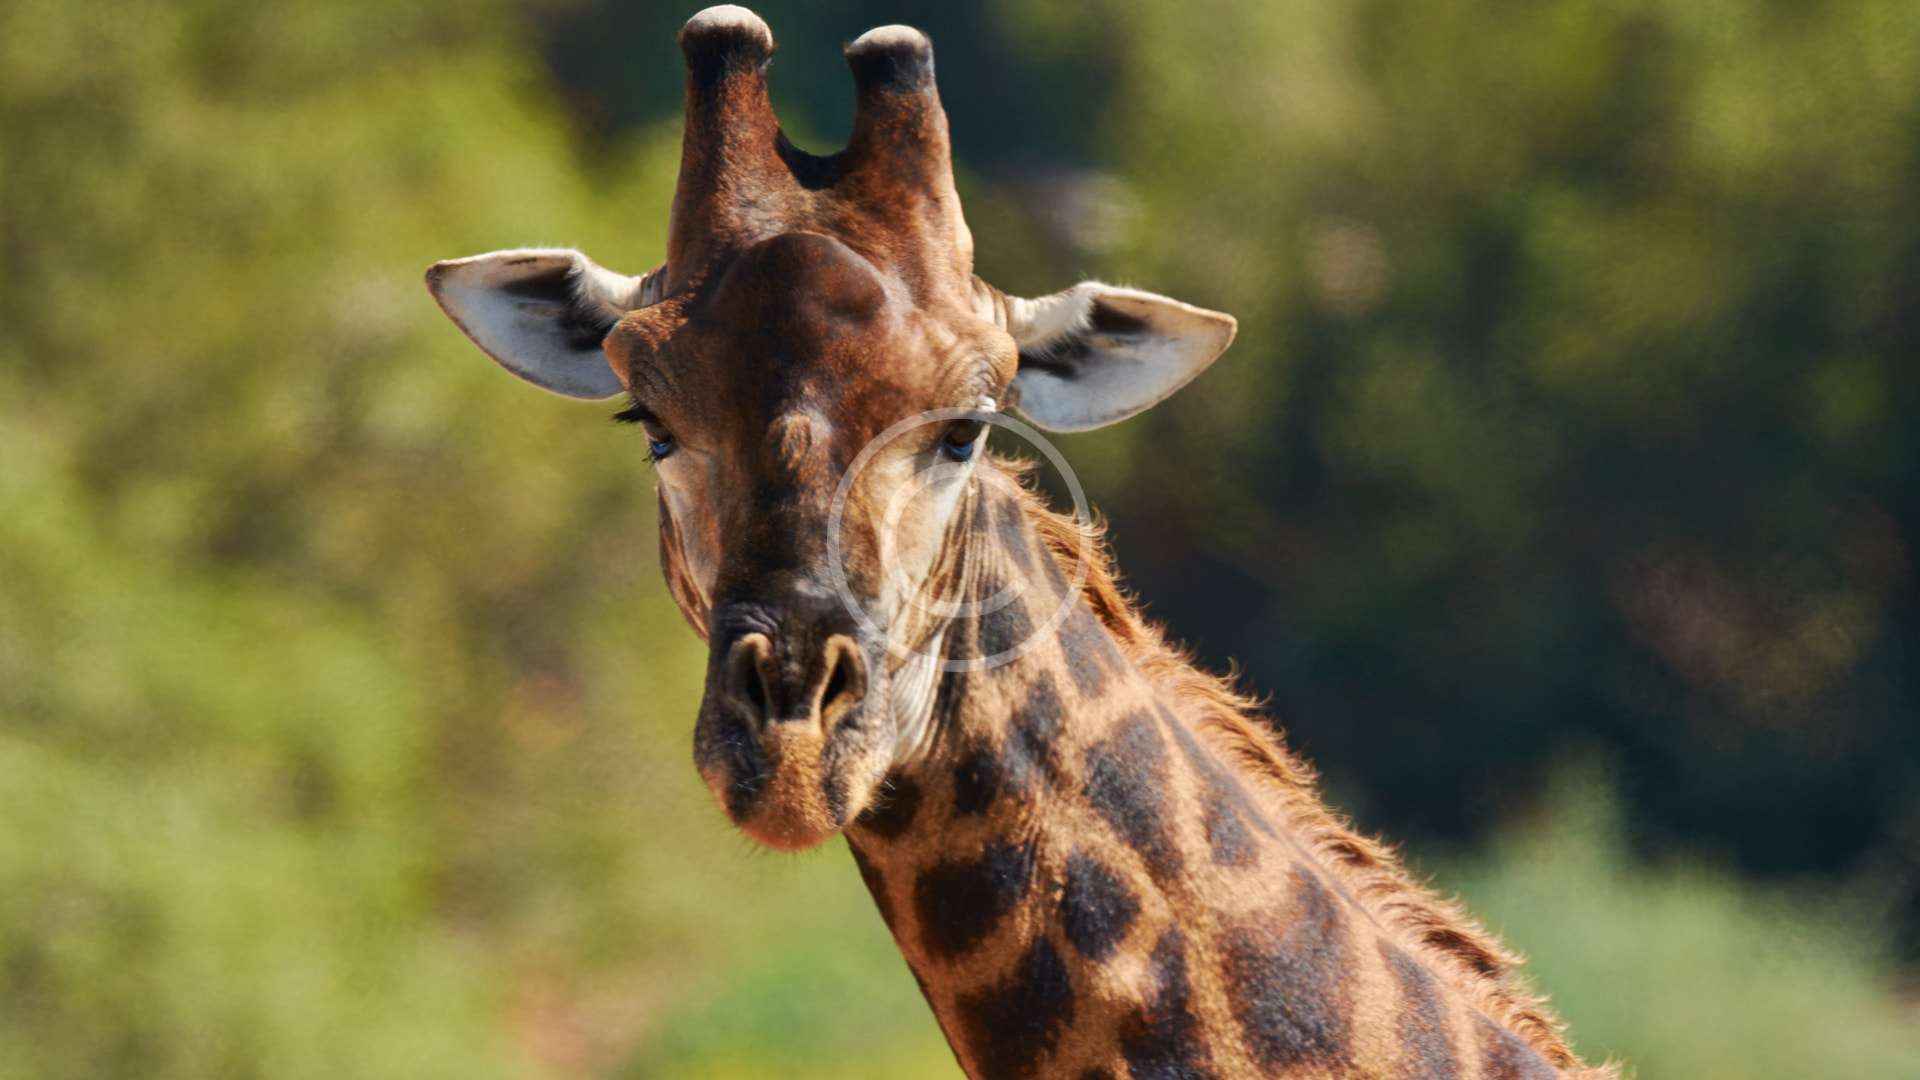 Donate to Giraffe Conservation